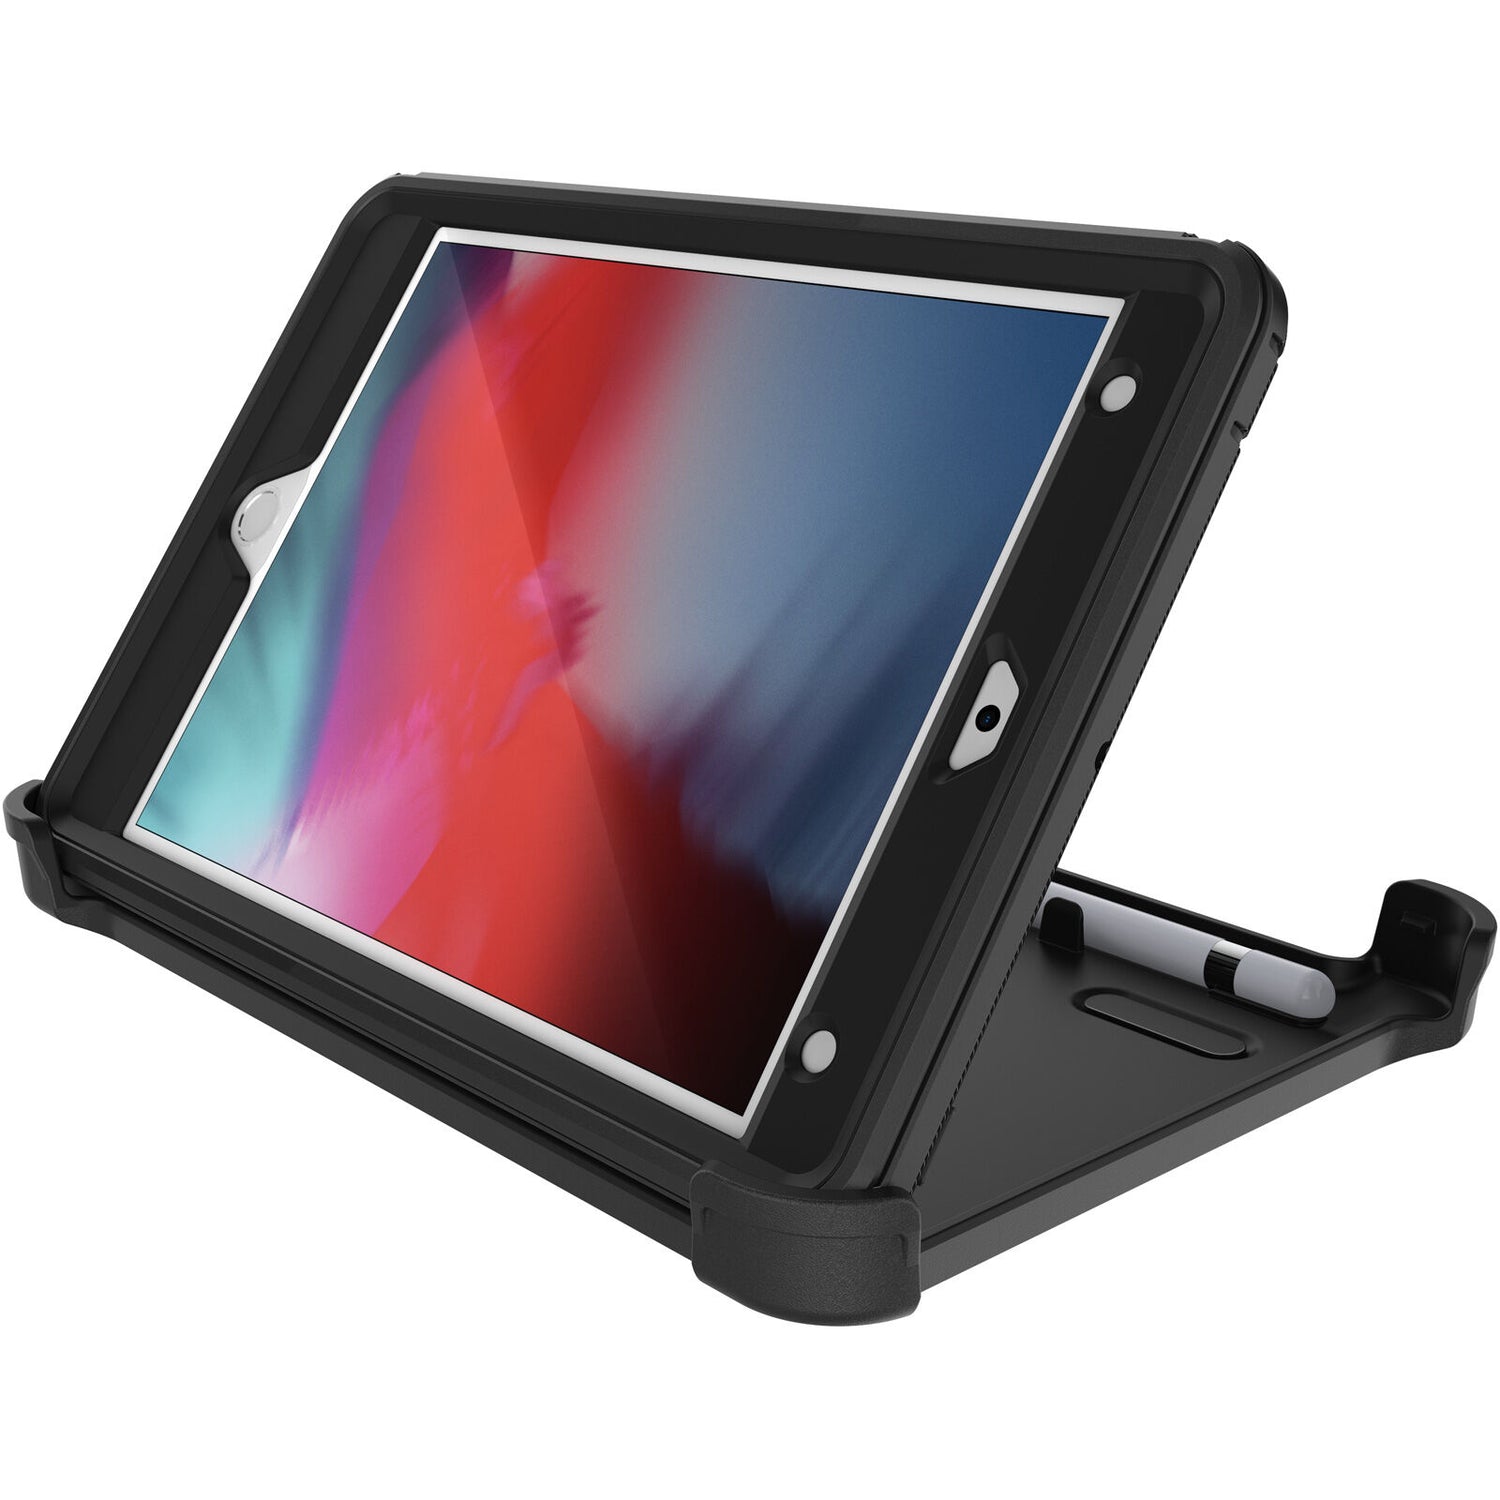 OtterBox DEFENDER SERIES Case for Apple iPad Mini 5 - Black (Certified Refurbished)